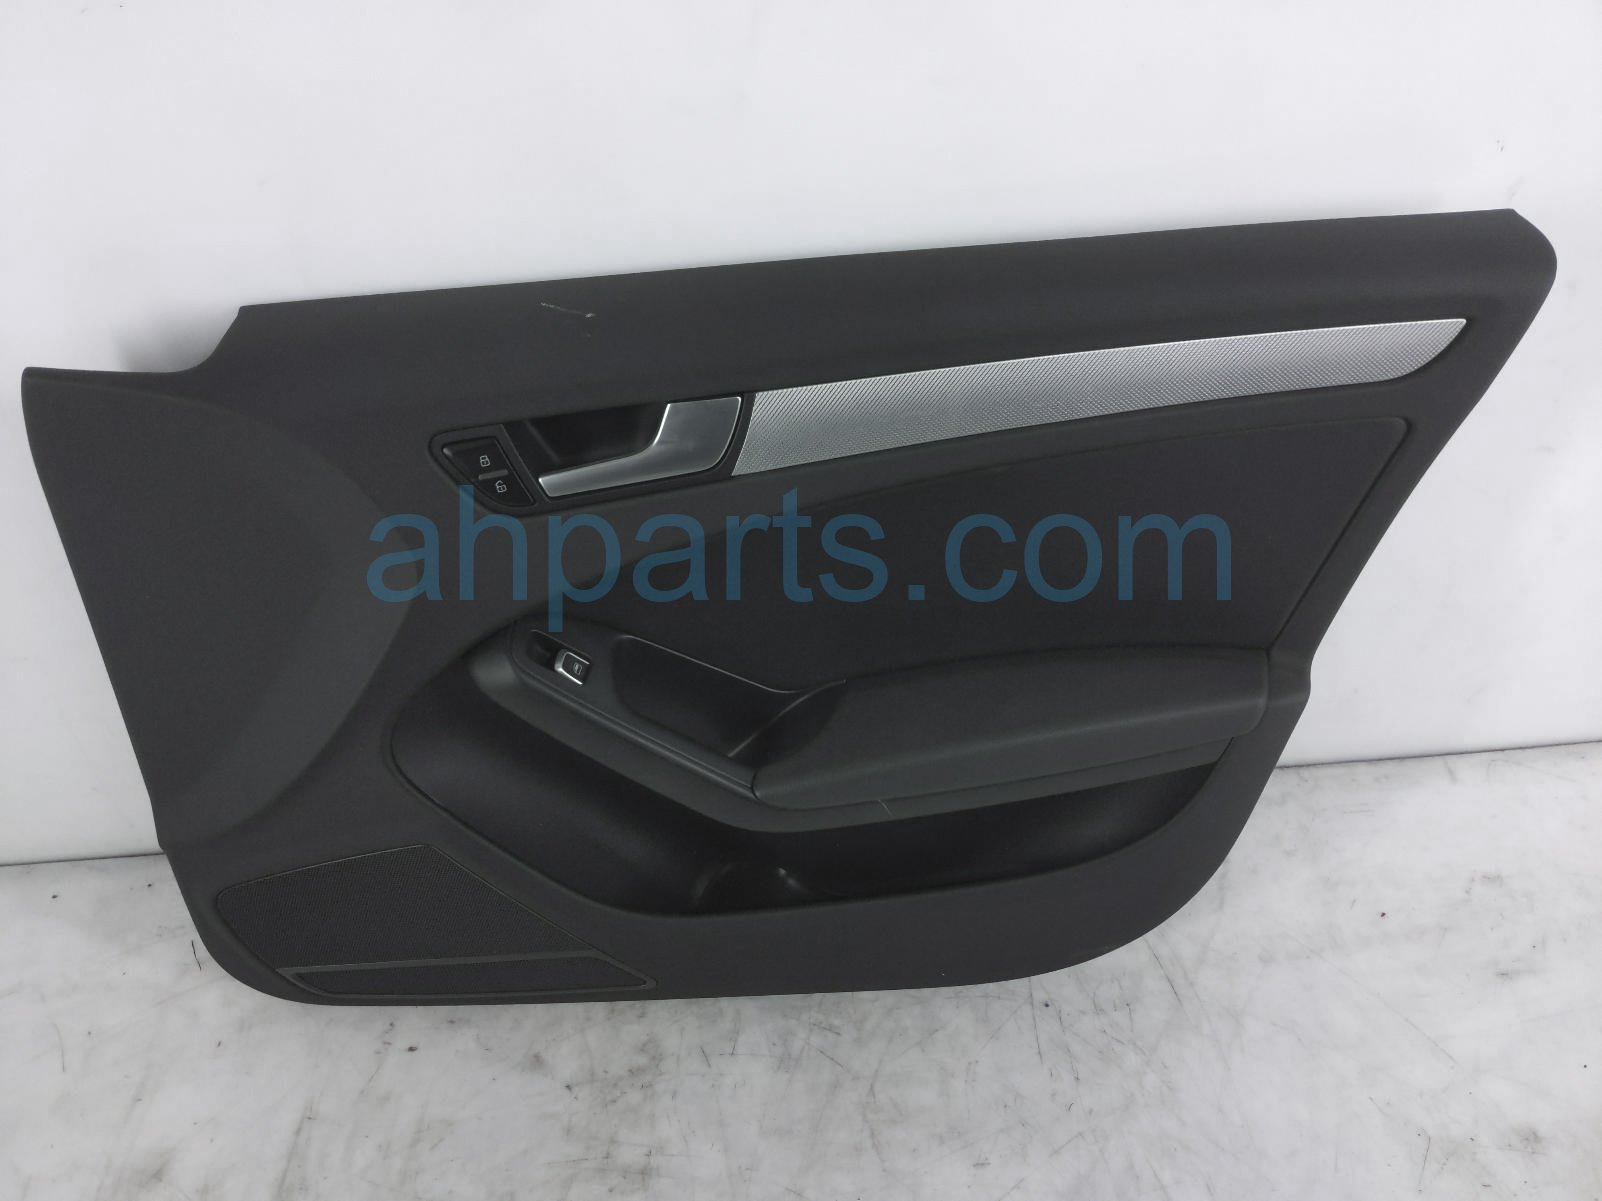 $150 Audi FR/RH INTERIOR DOOR PANEL - BLACK